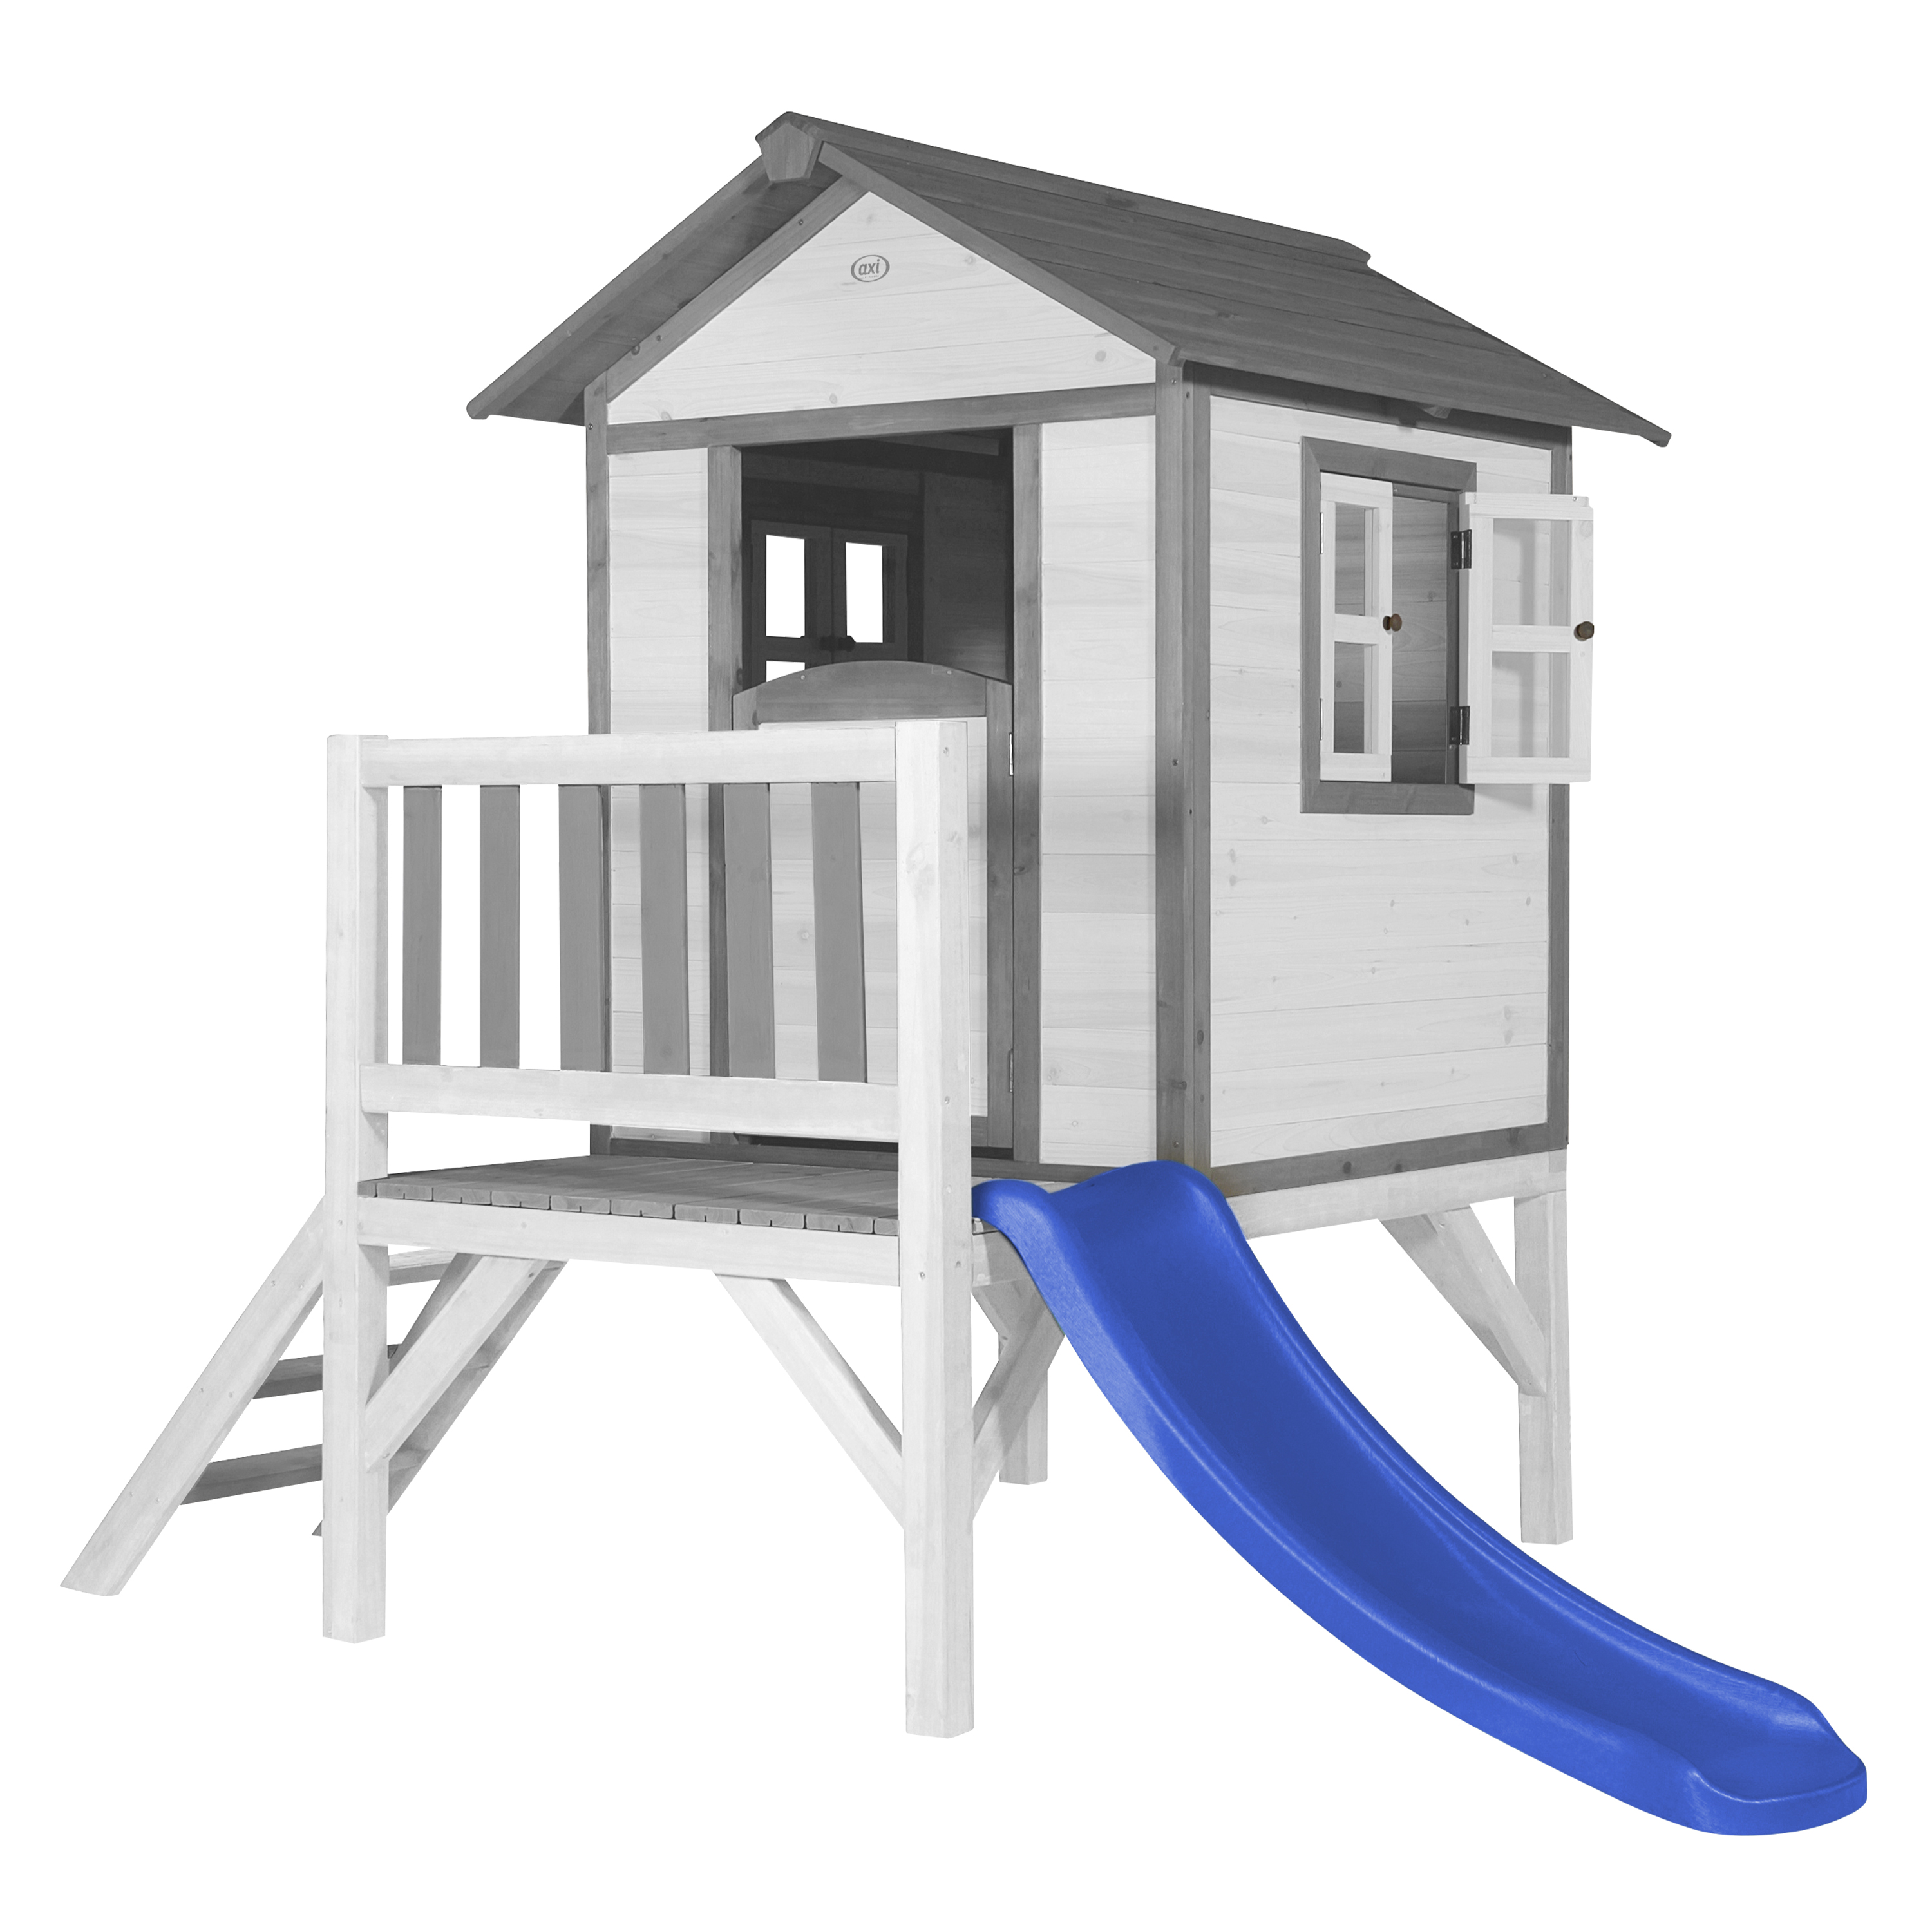 Lodge XL Playhouse Classic - Blue Slide